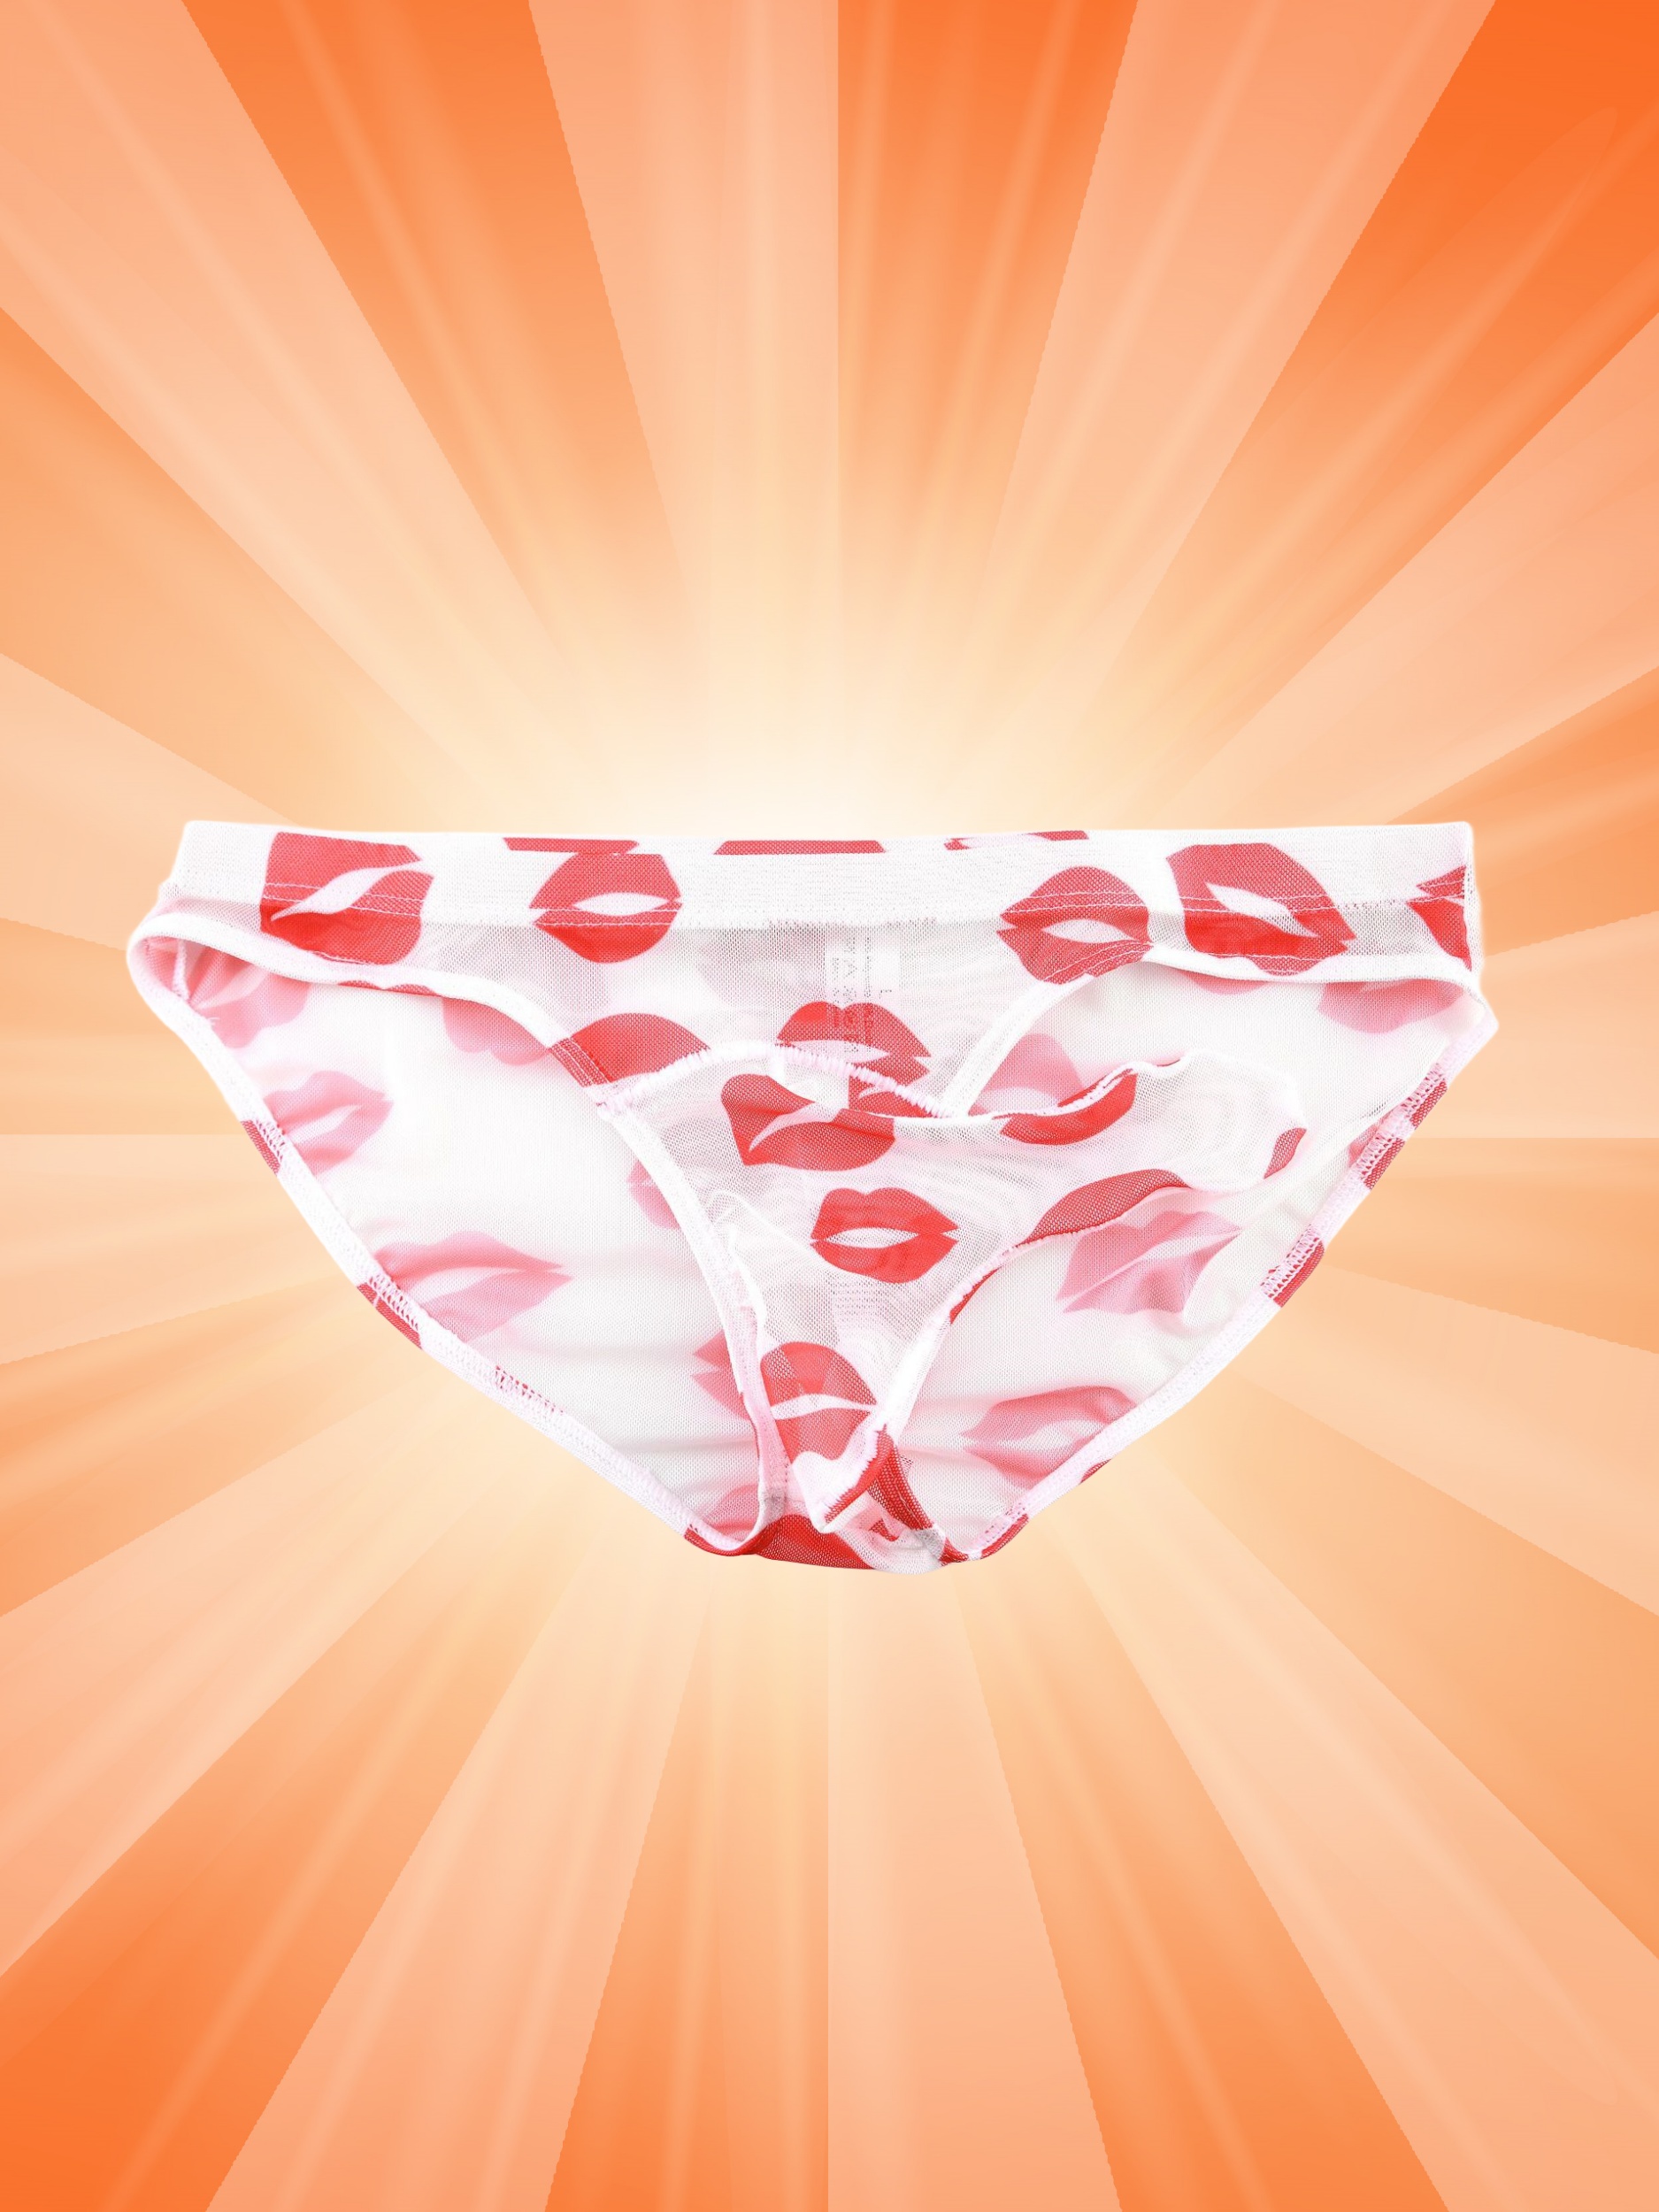 Men's Underwear, Jacquard Mesh Hole Semi-transparent Briefs, Sexy  Underpants, Breathable Comfy Stretchy Panties